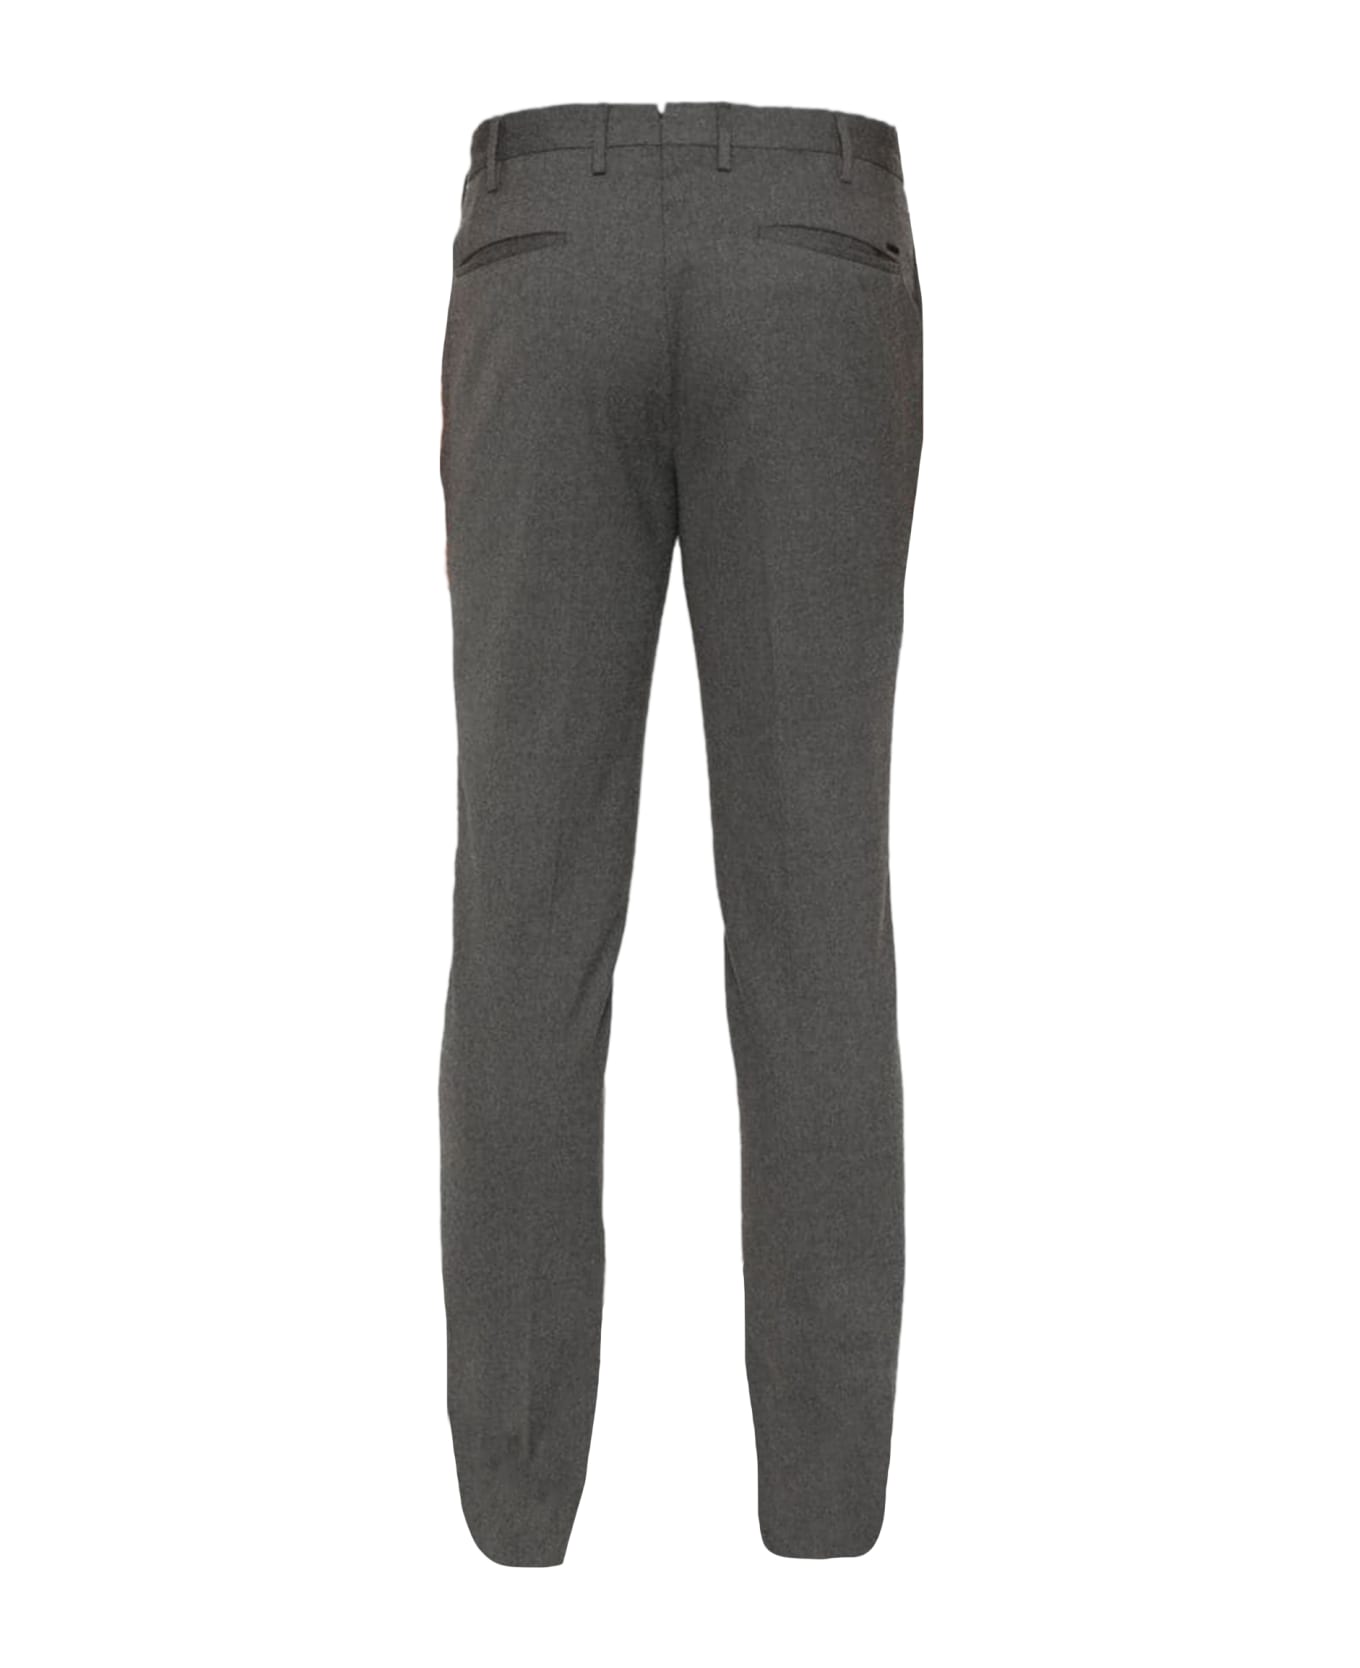 Incotex Dark Grey Wool Blend Trousers - Grey ボトムス